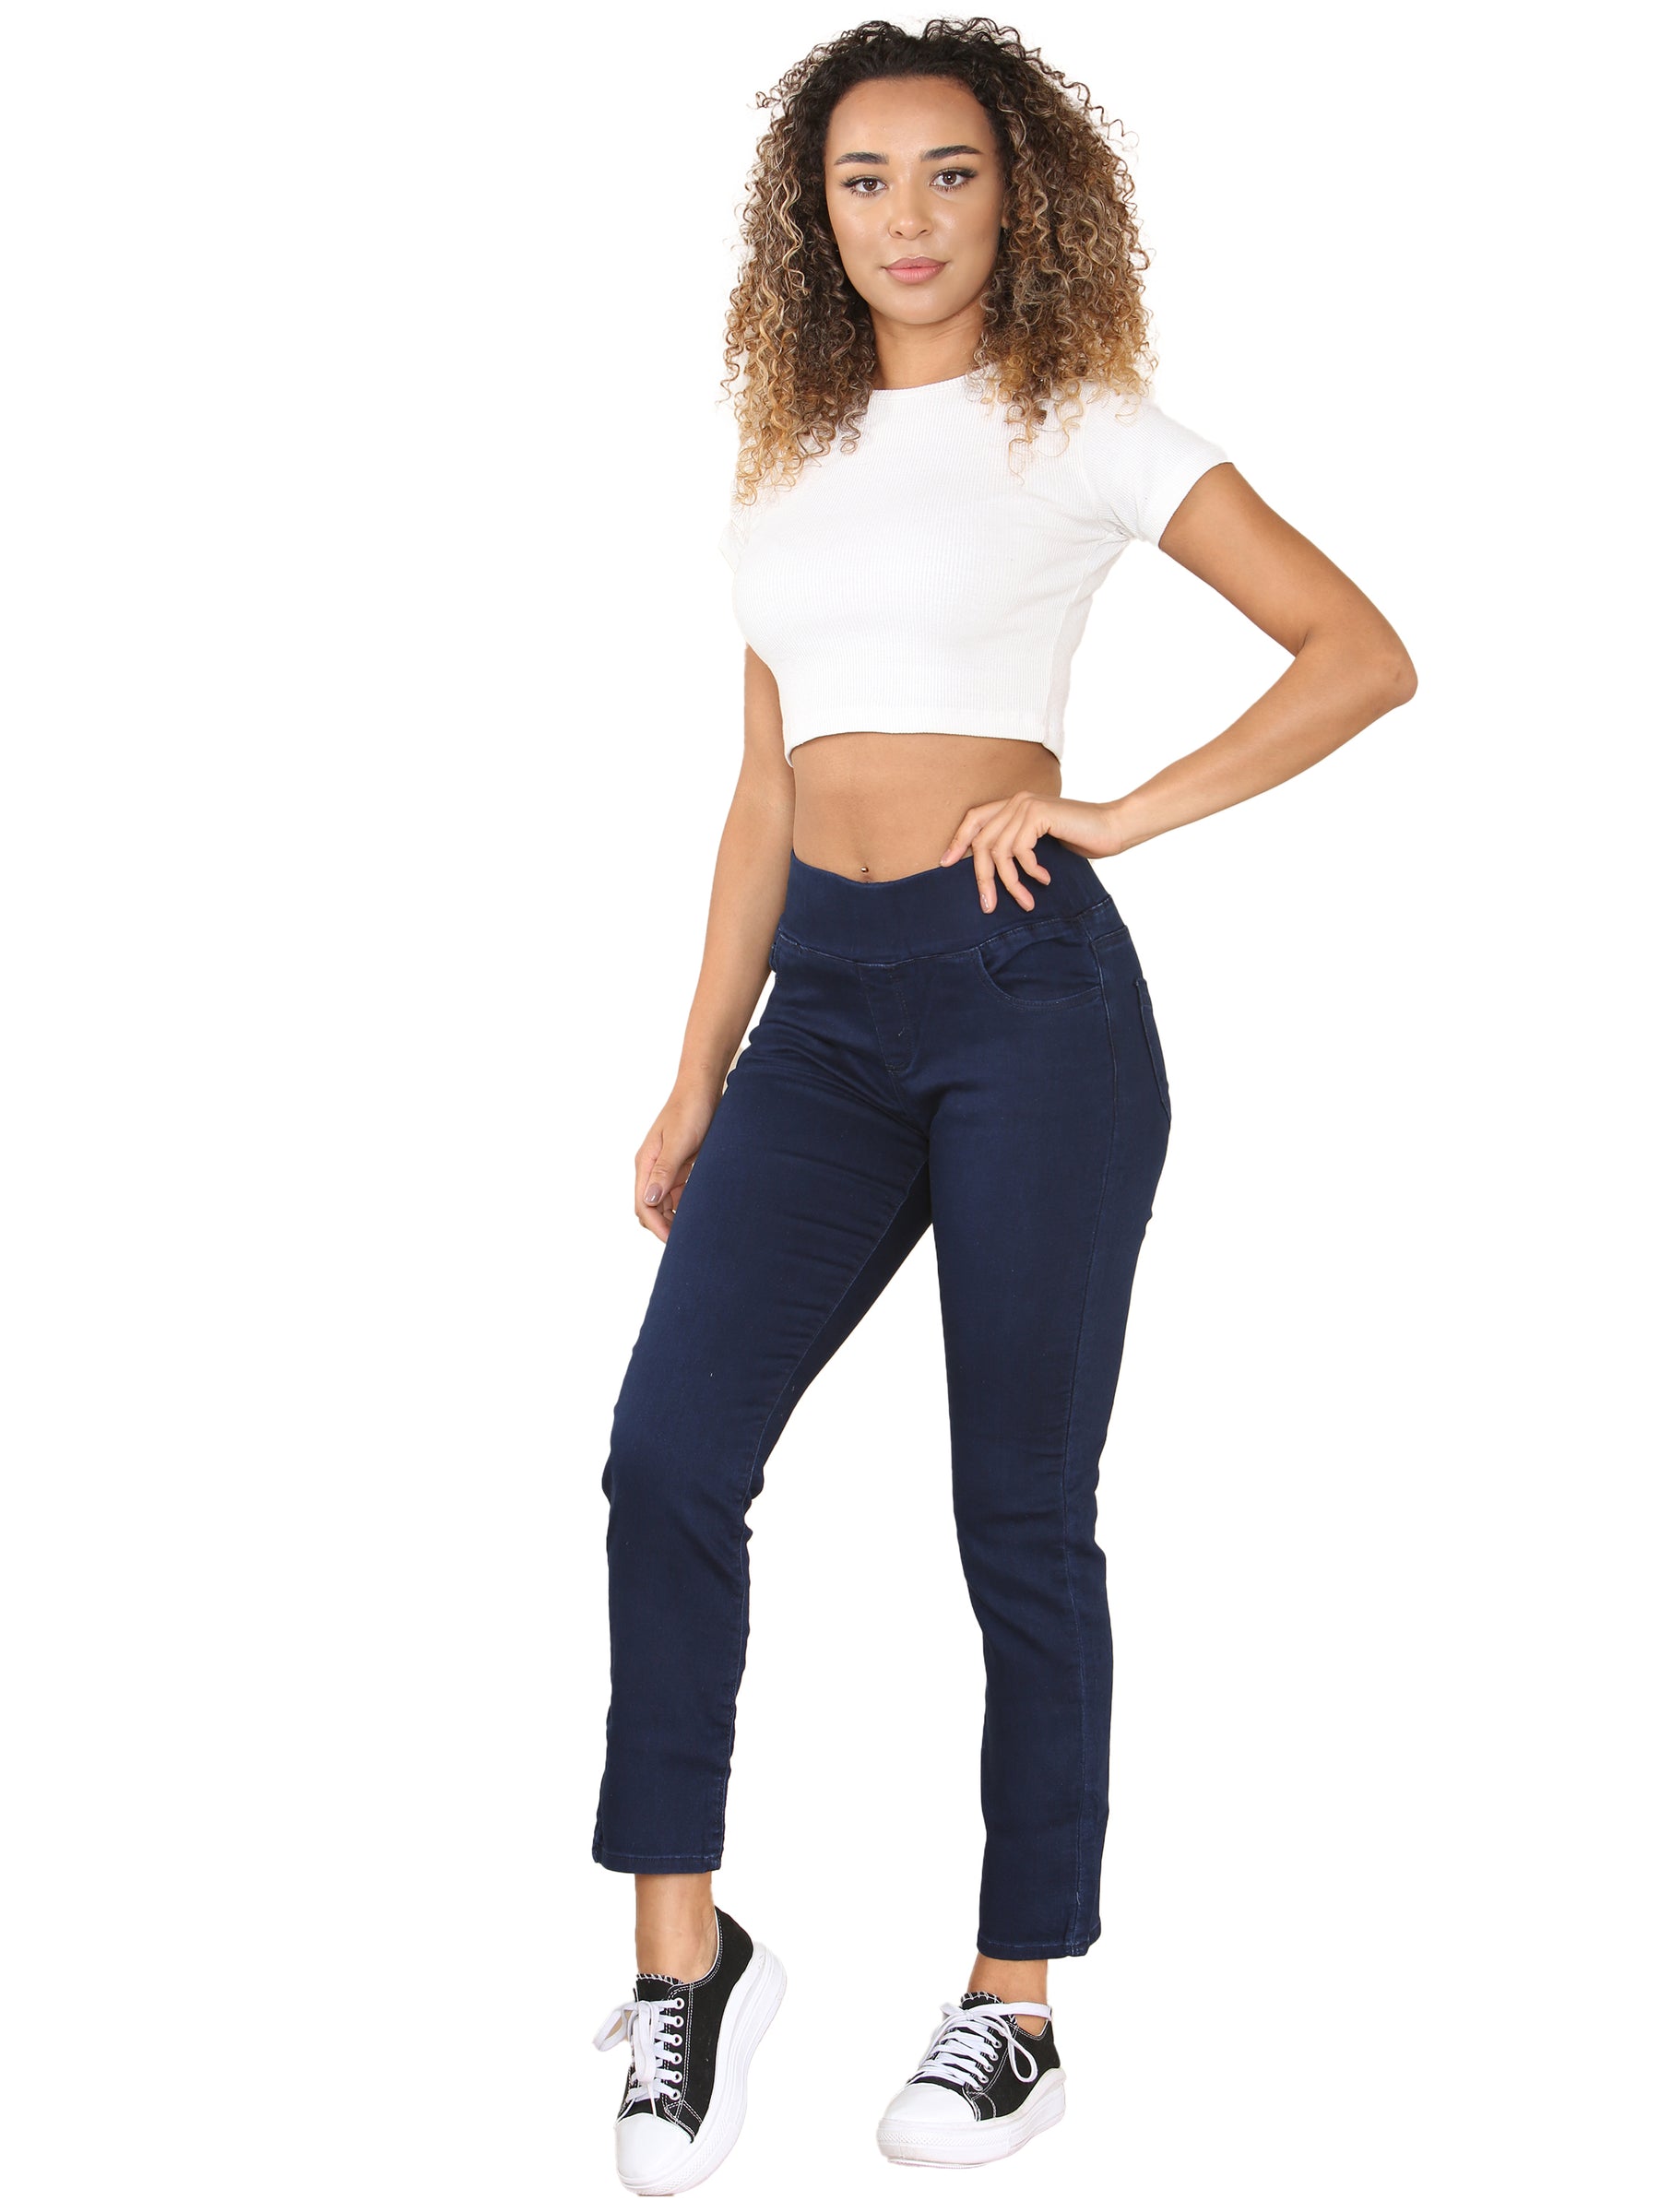 EZL432 Enzo Womens Wide Leg Denim Jeans Mid Rise Elasticated Waist Cotton Stretch Pants RAWDENIM RAWDENIM